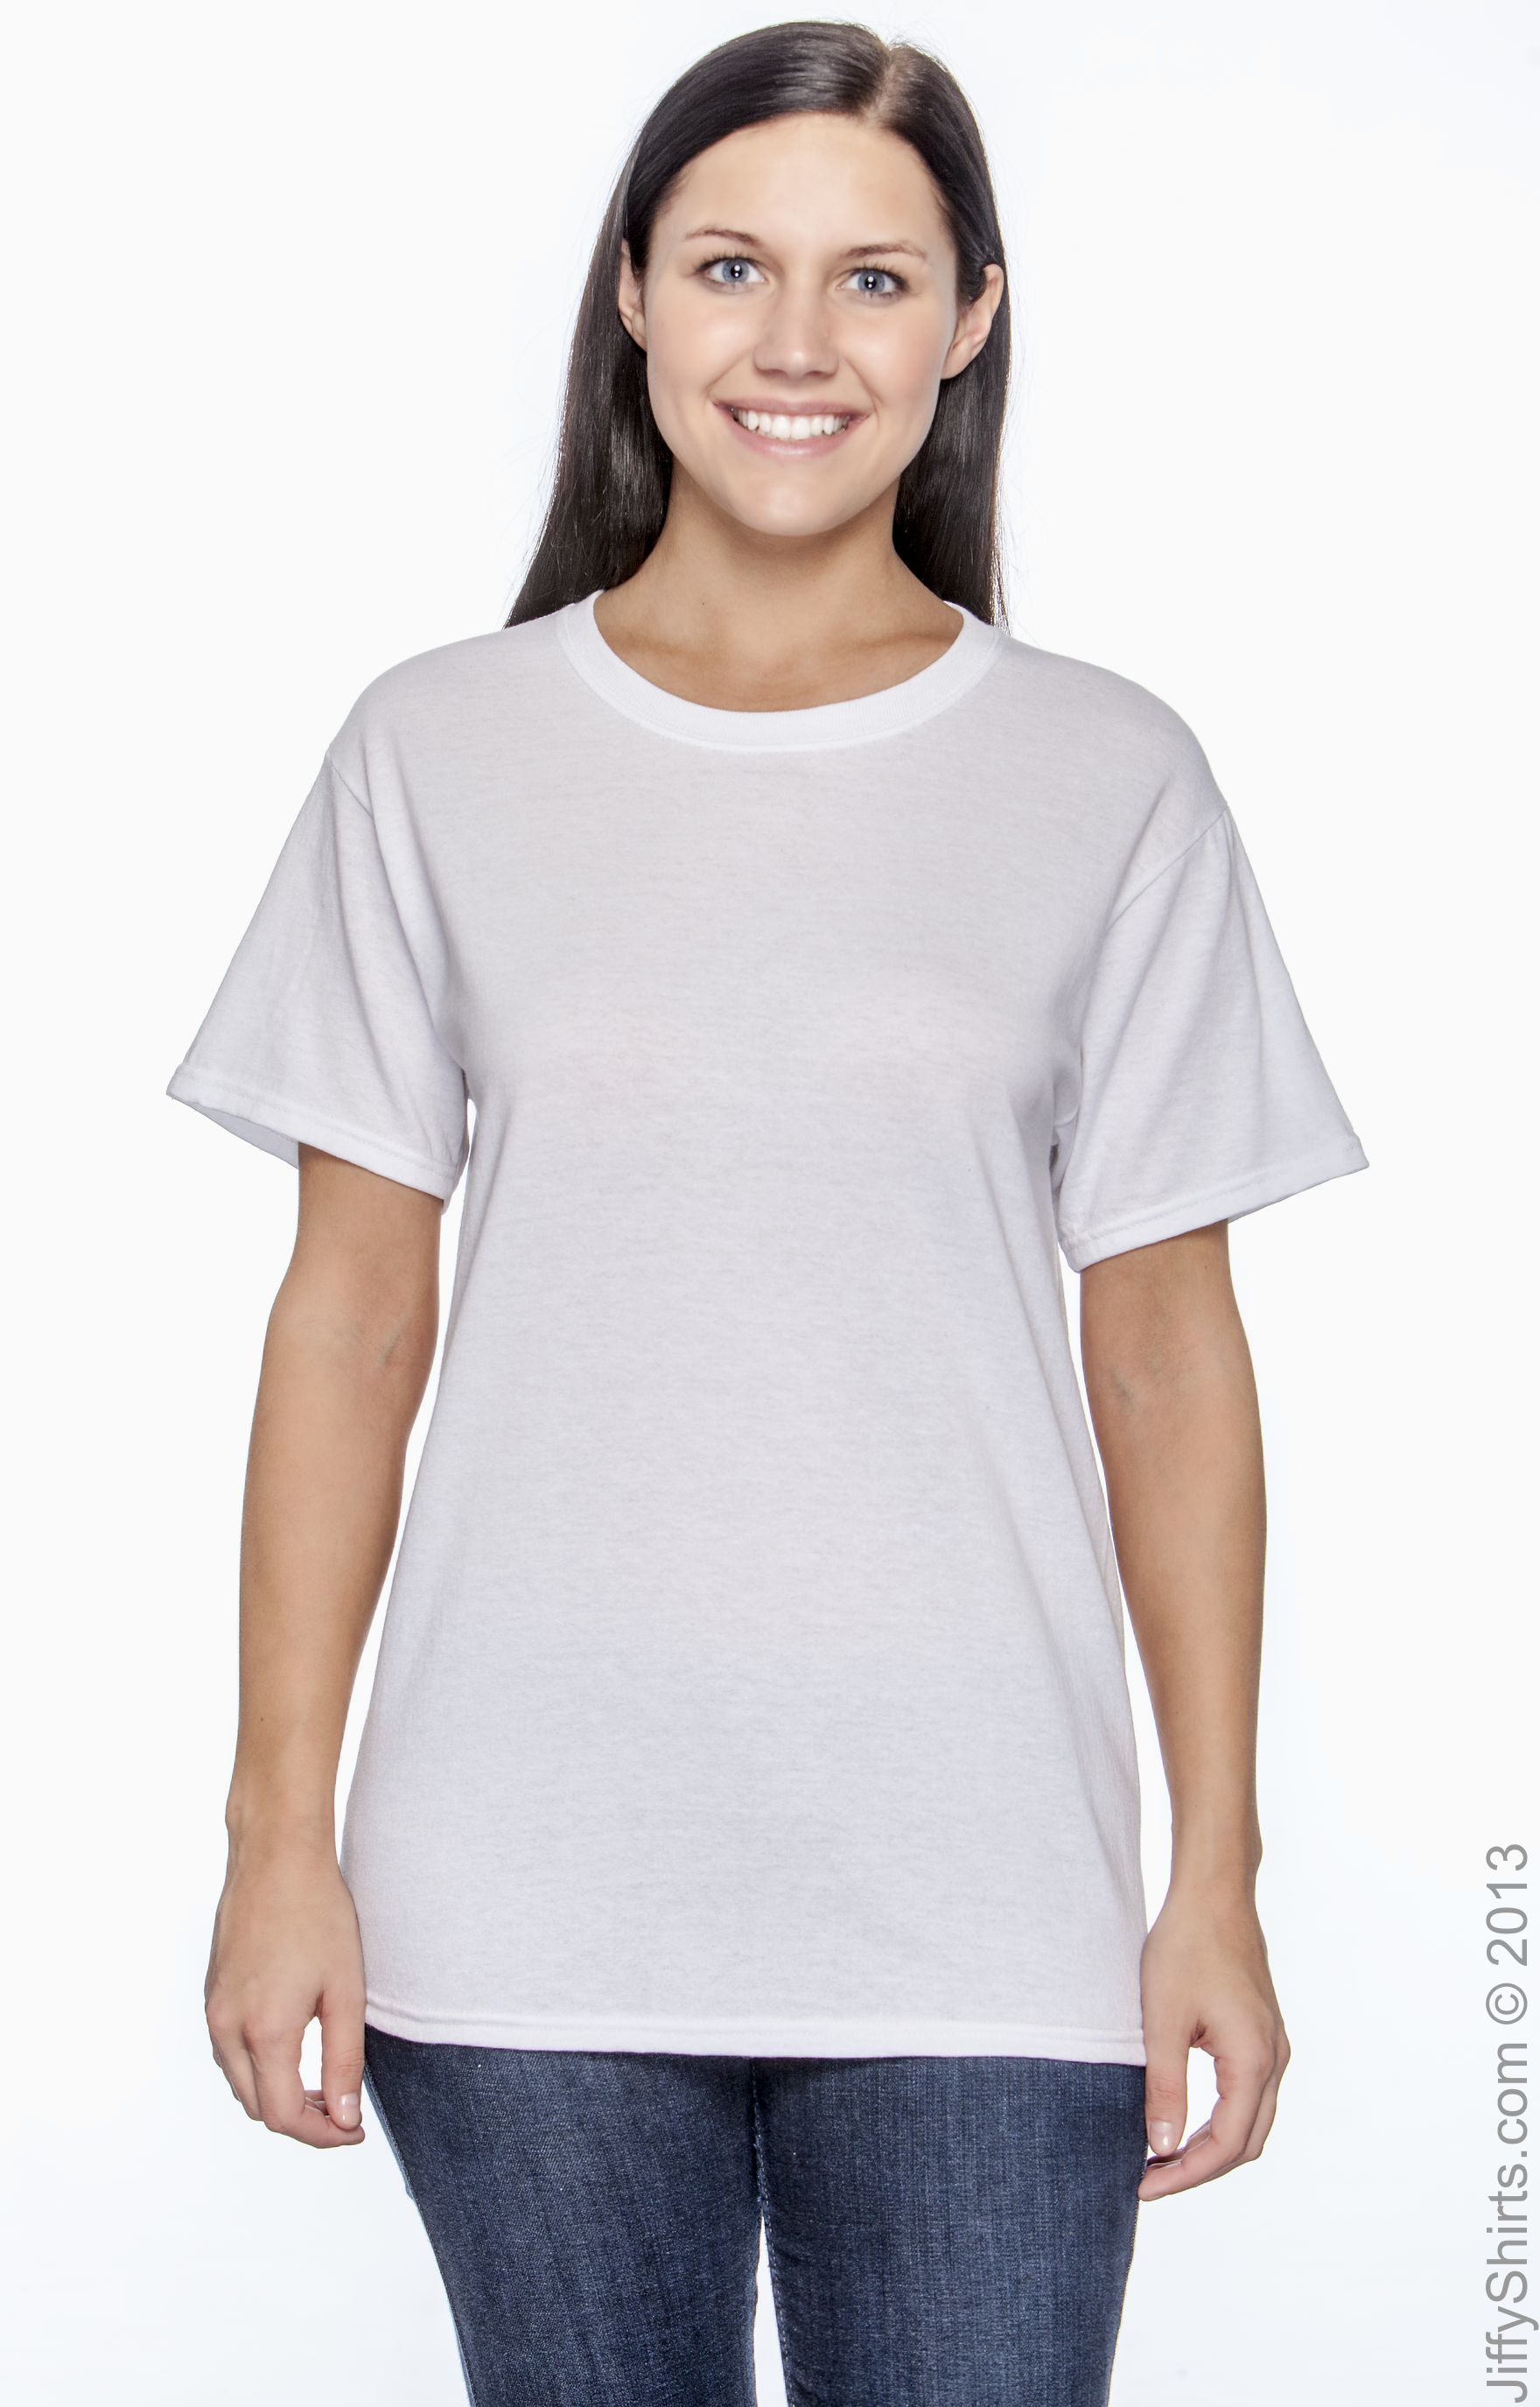 Hanes Short Sleeve 50/50 T-Shirt Big Sizes 